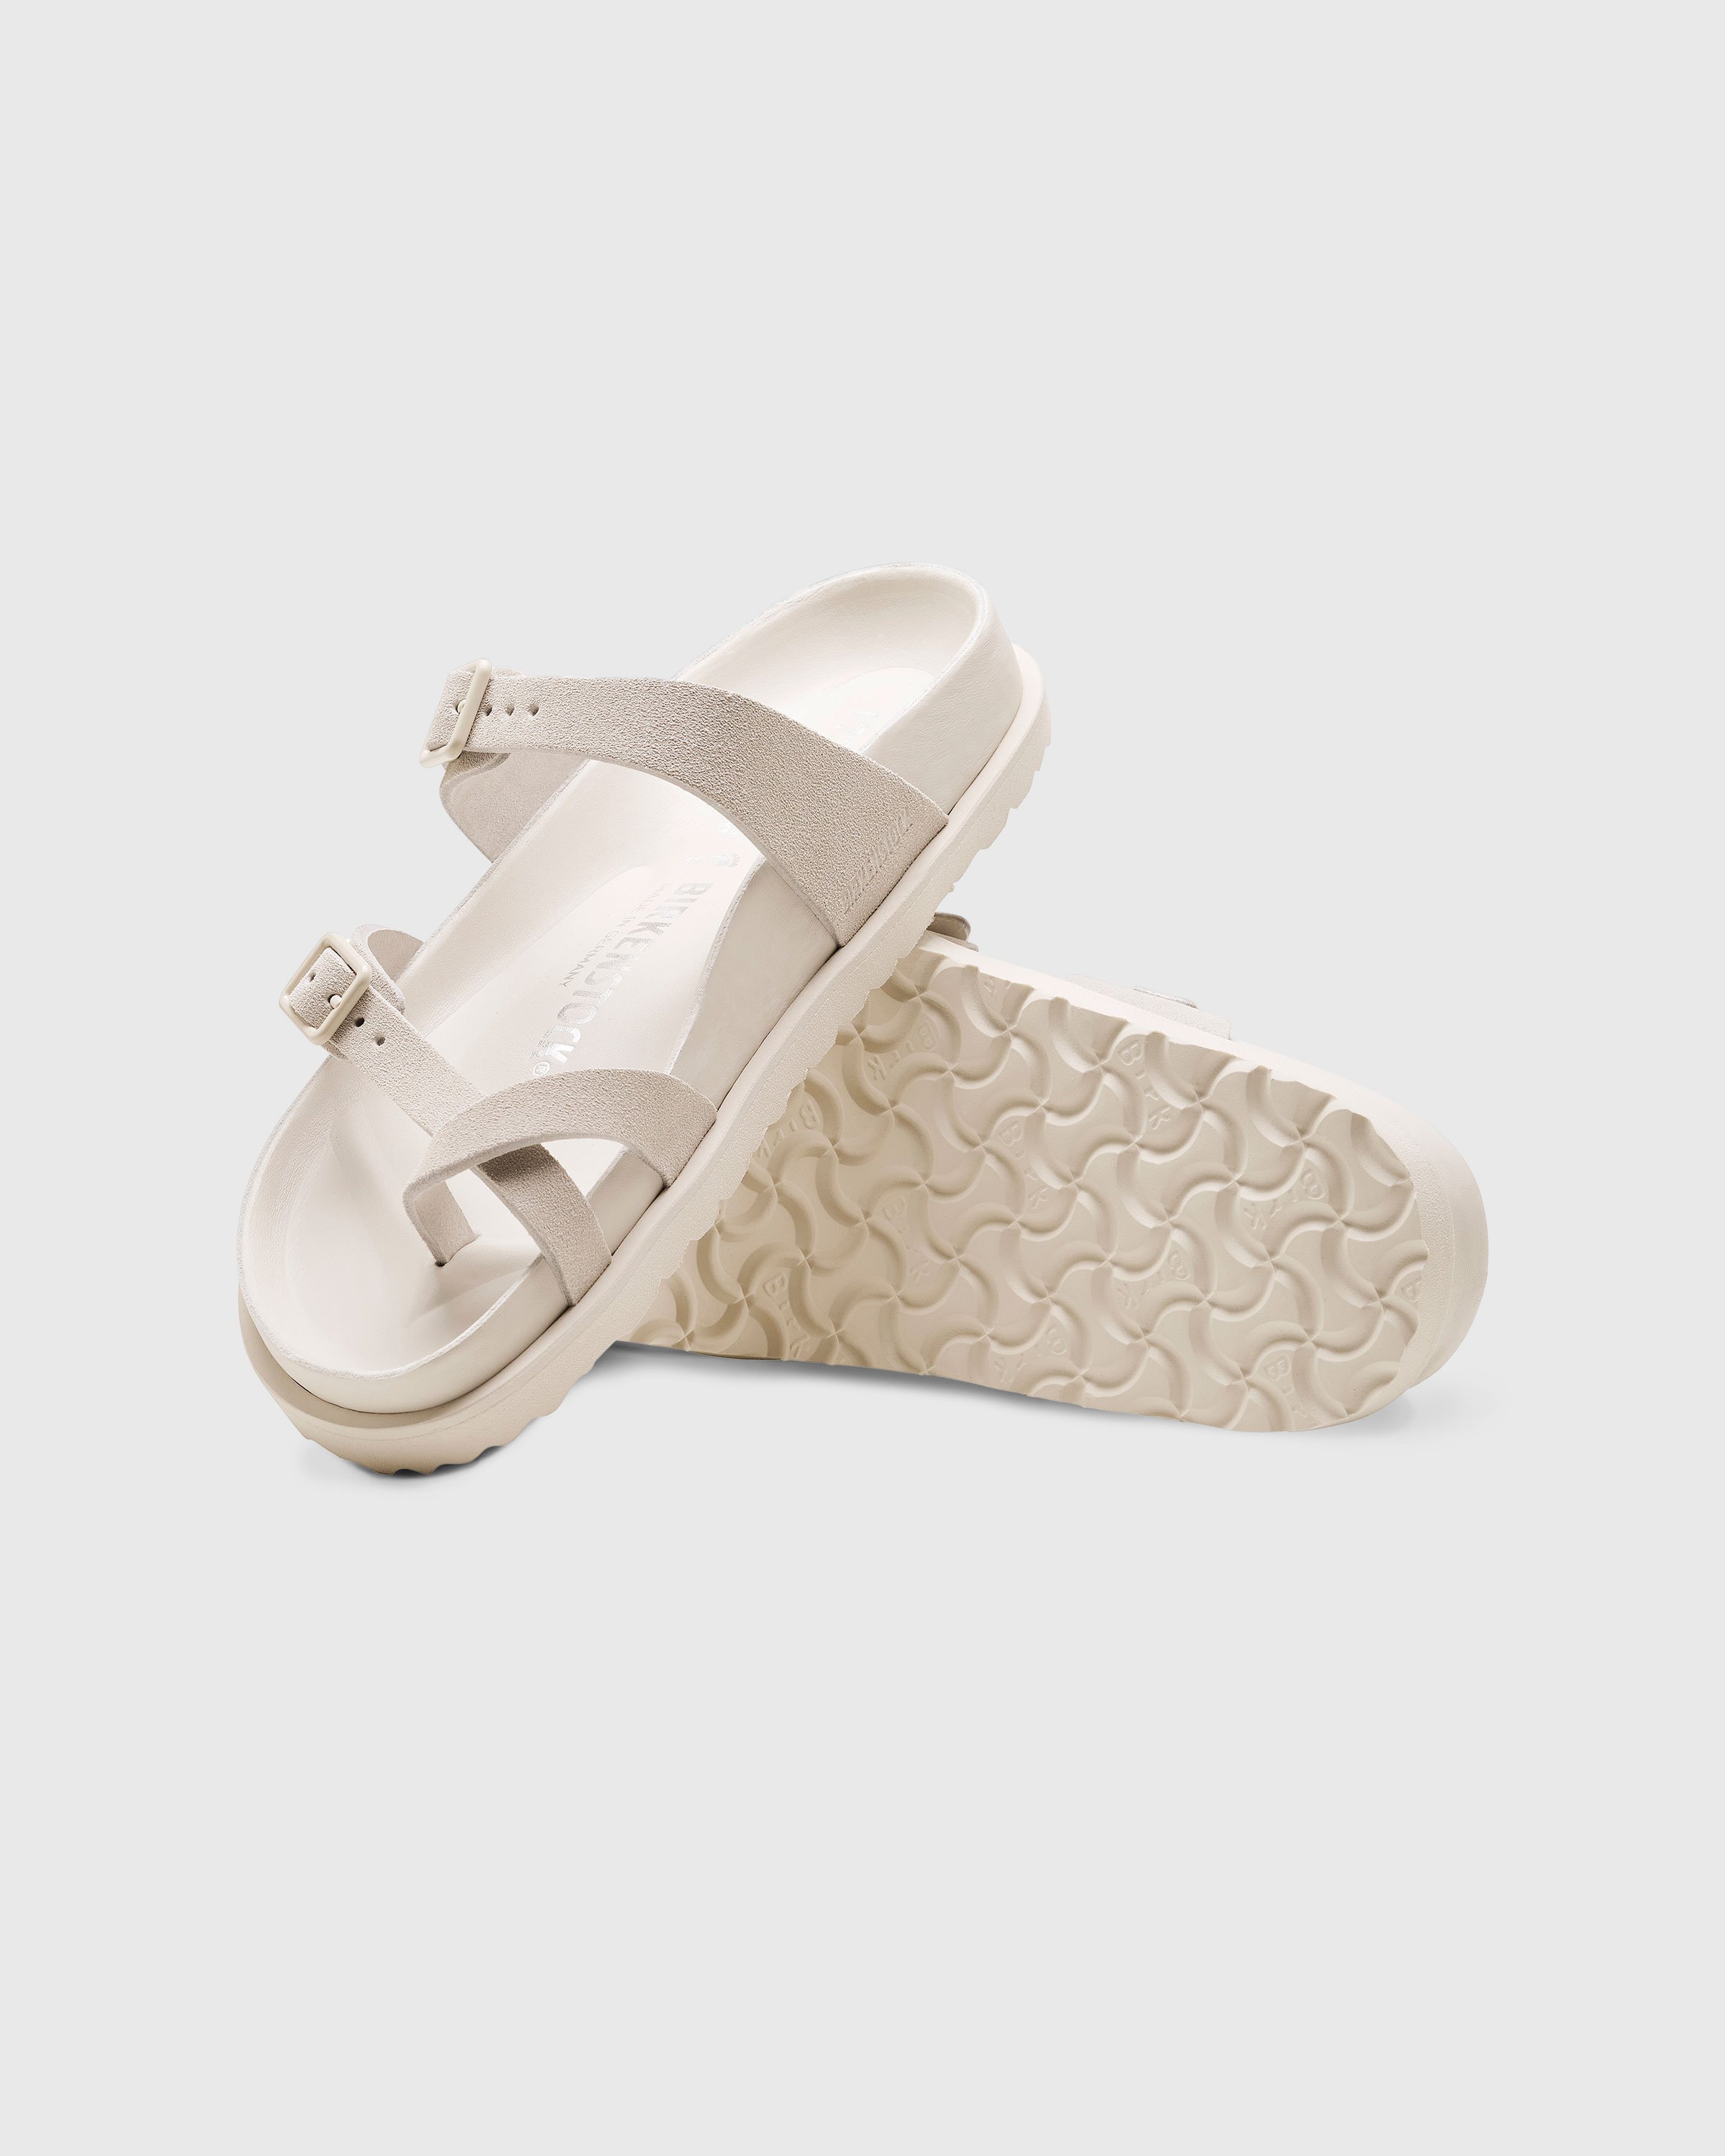 Birkenstock - Mayari Suede Leather Bone - Footwear - White - Image 3